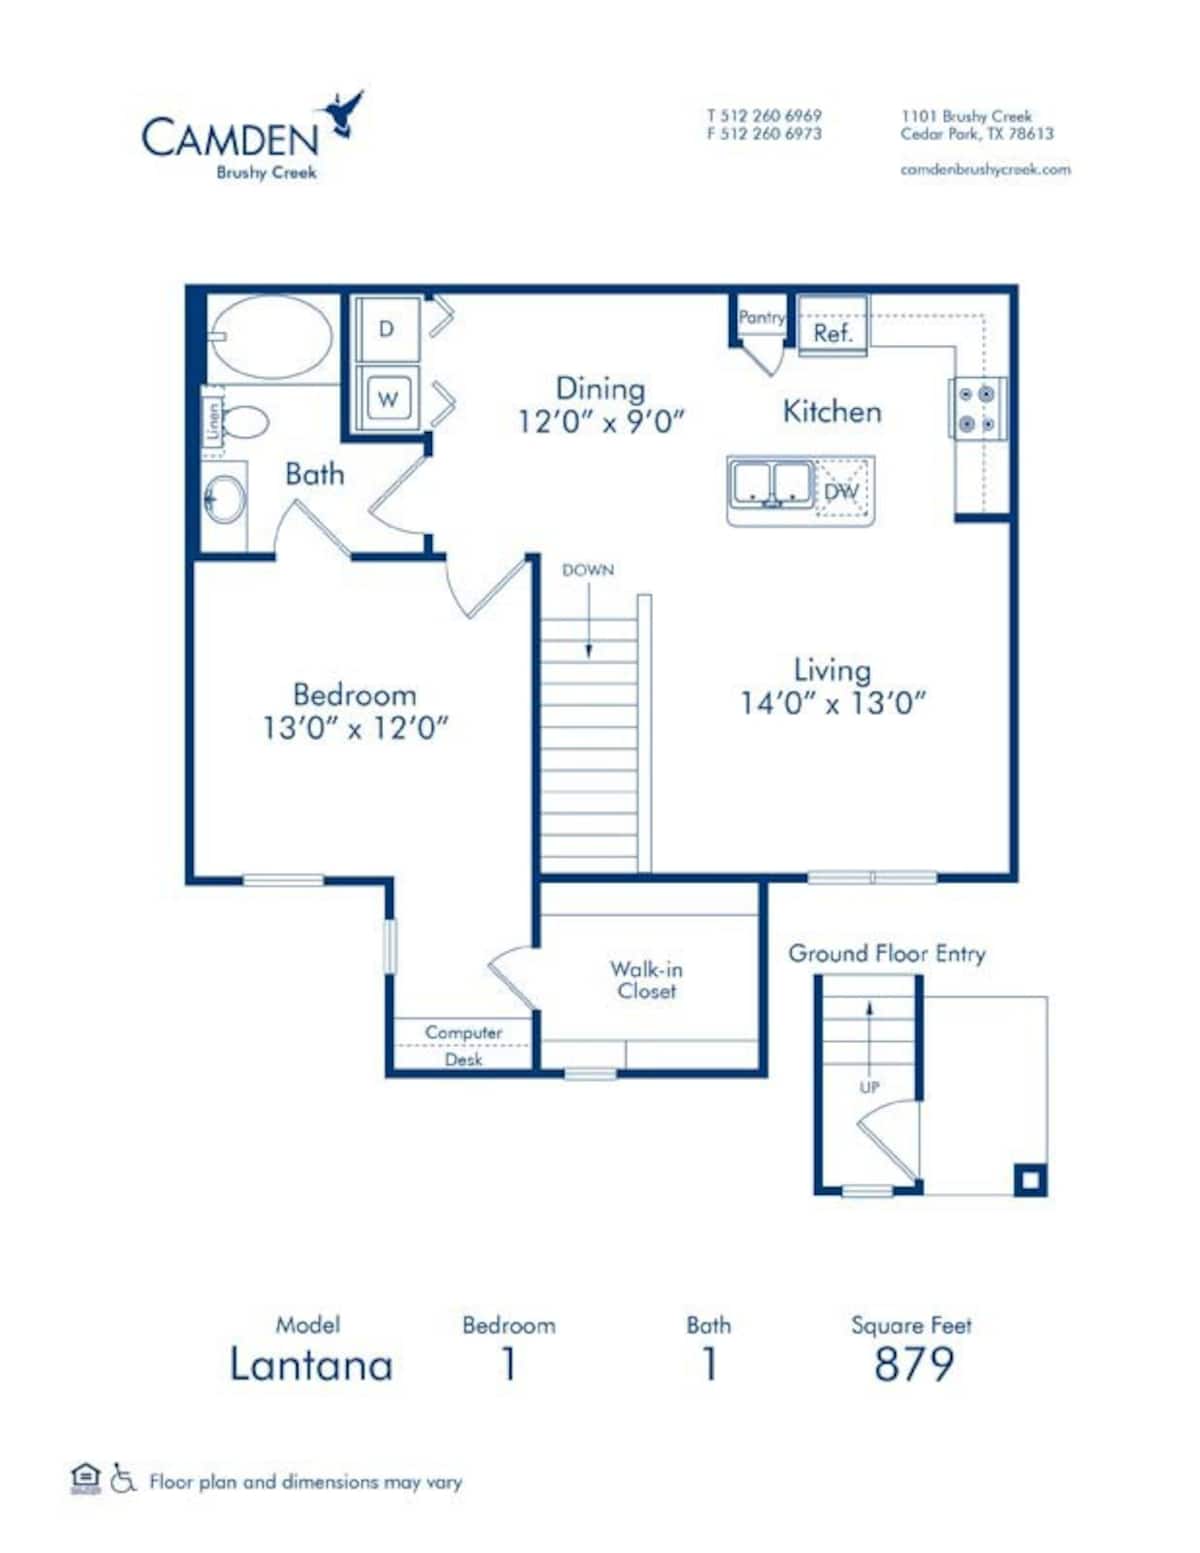 Floorplan diagram for Lantana, showing 1 bedroom